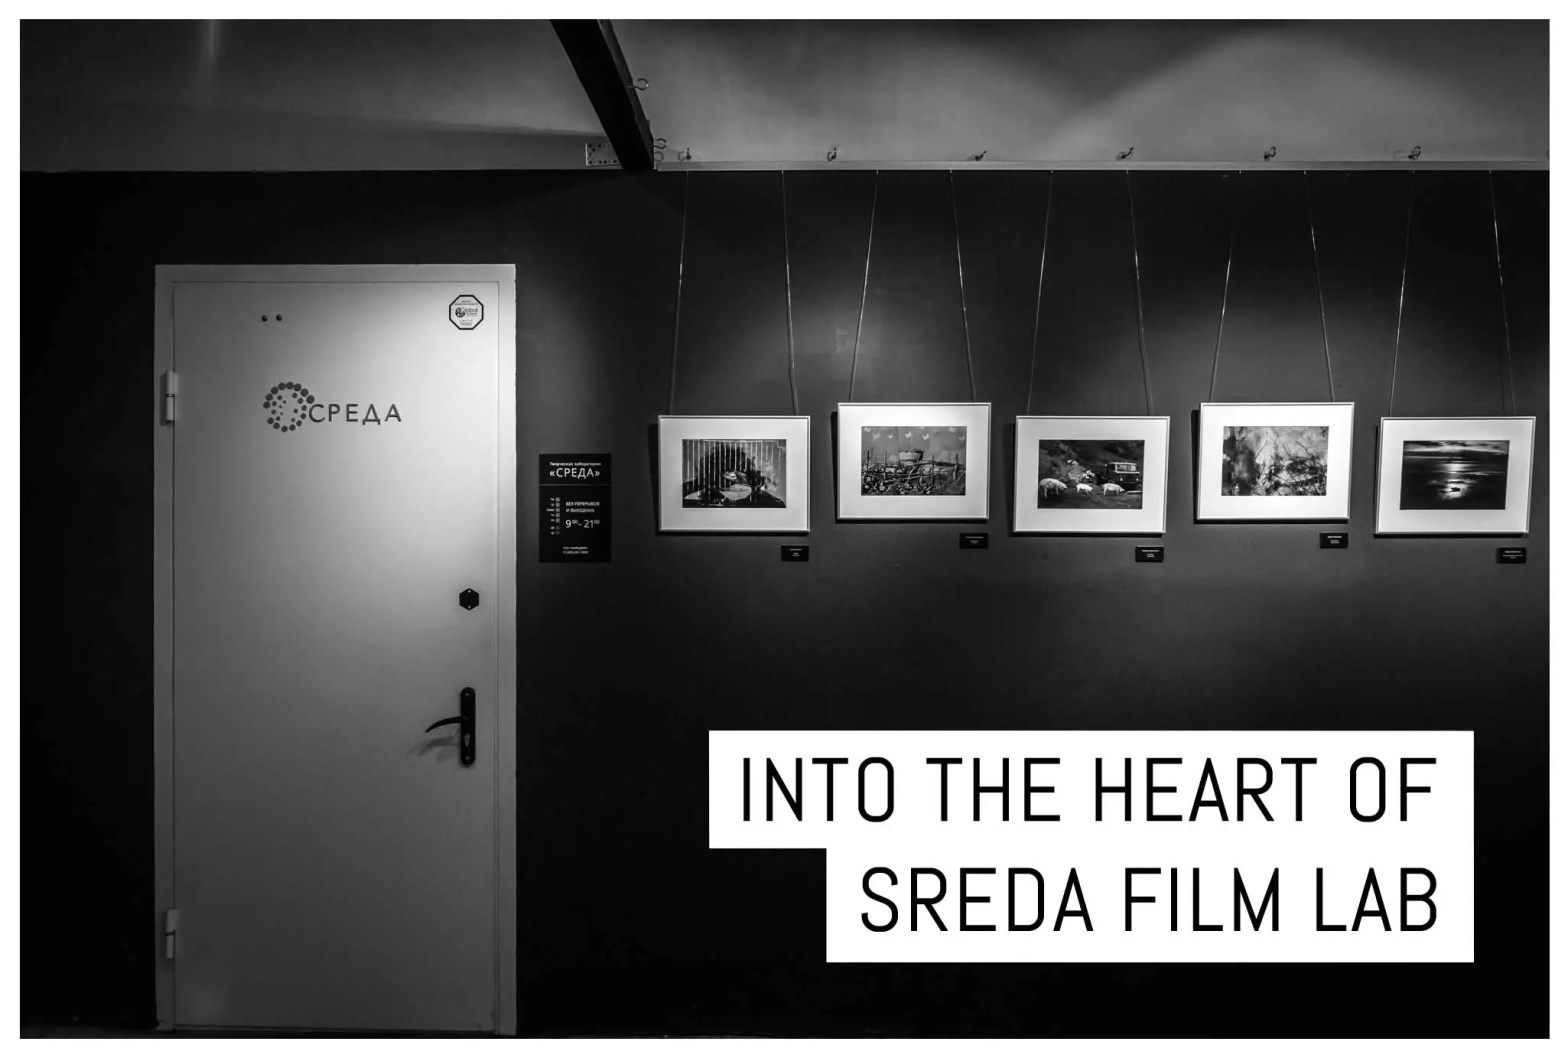 Into the heart of SREDA Film Lab